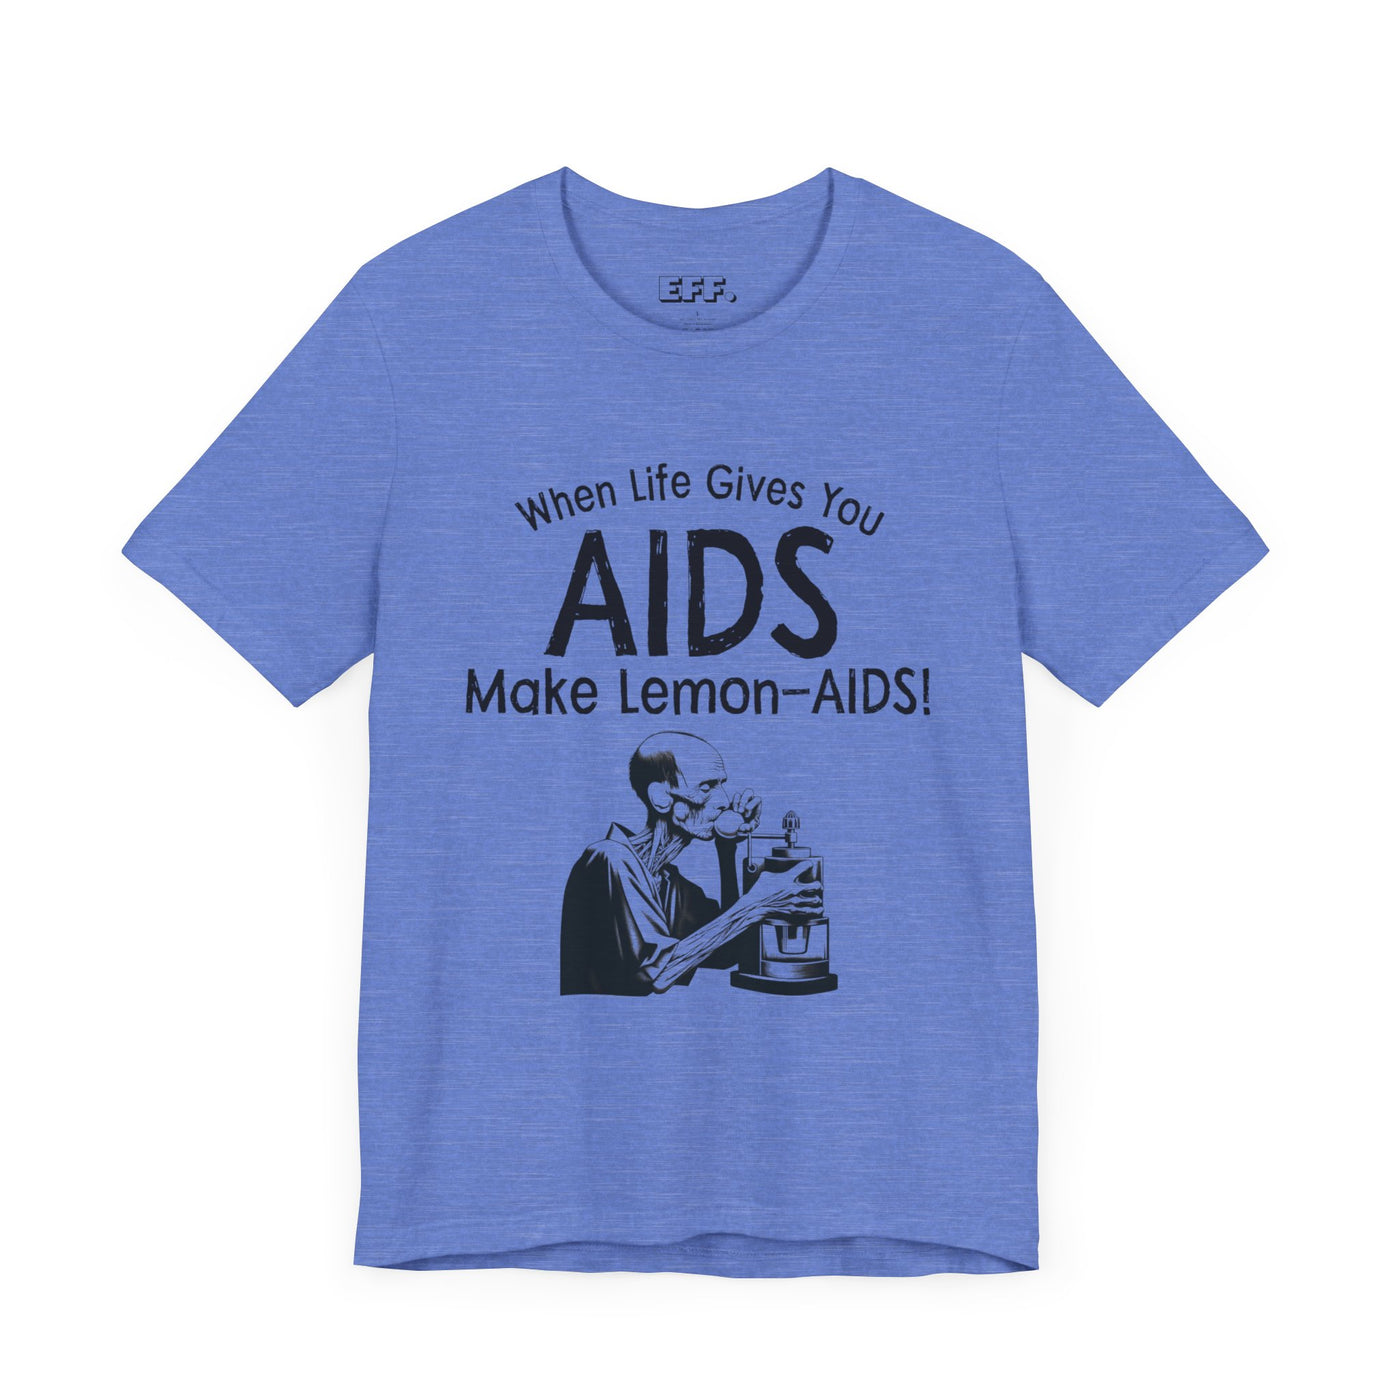 When Life Gives You AIDS, Make Lemon-AIDS!